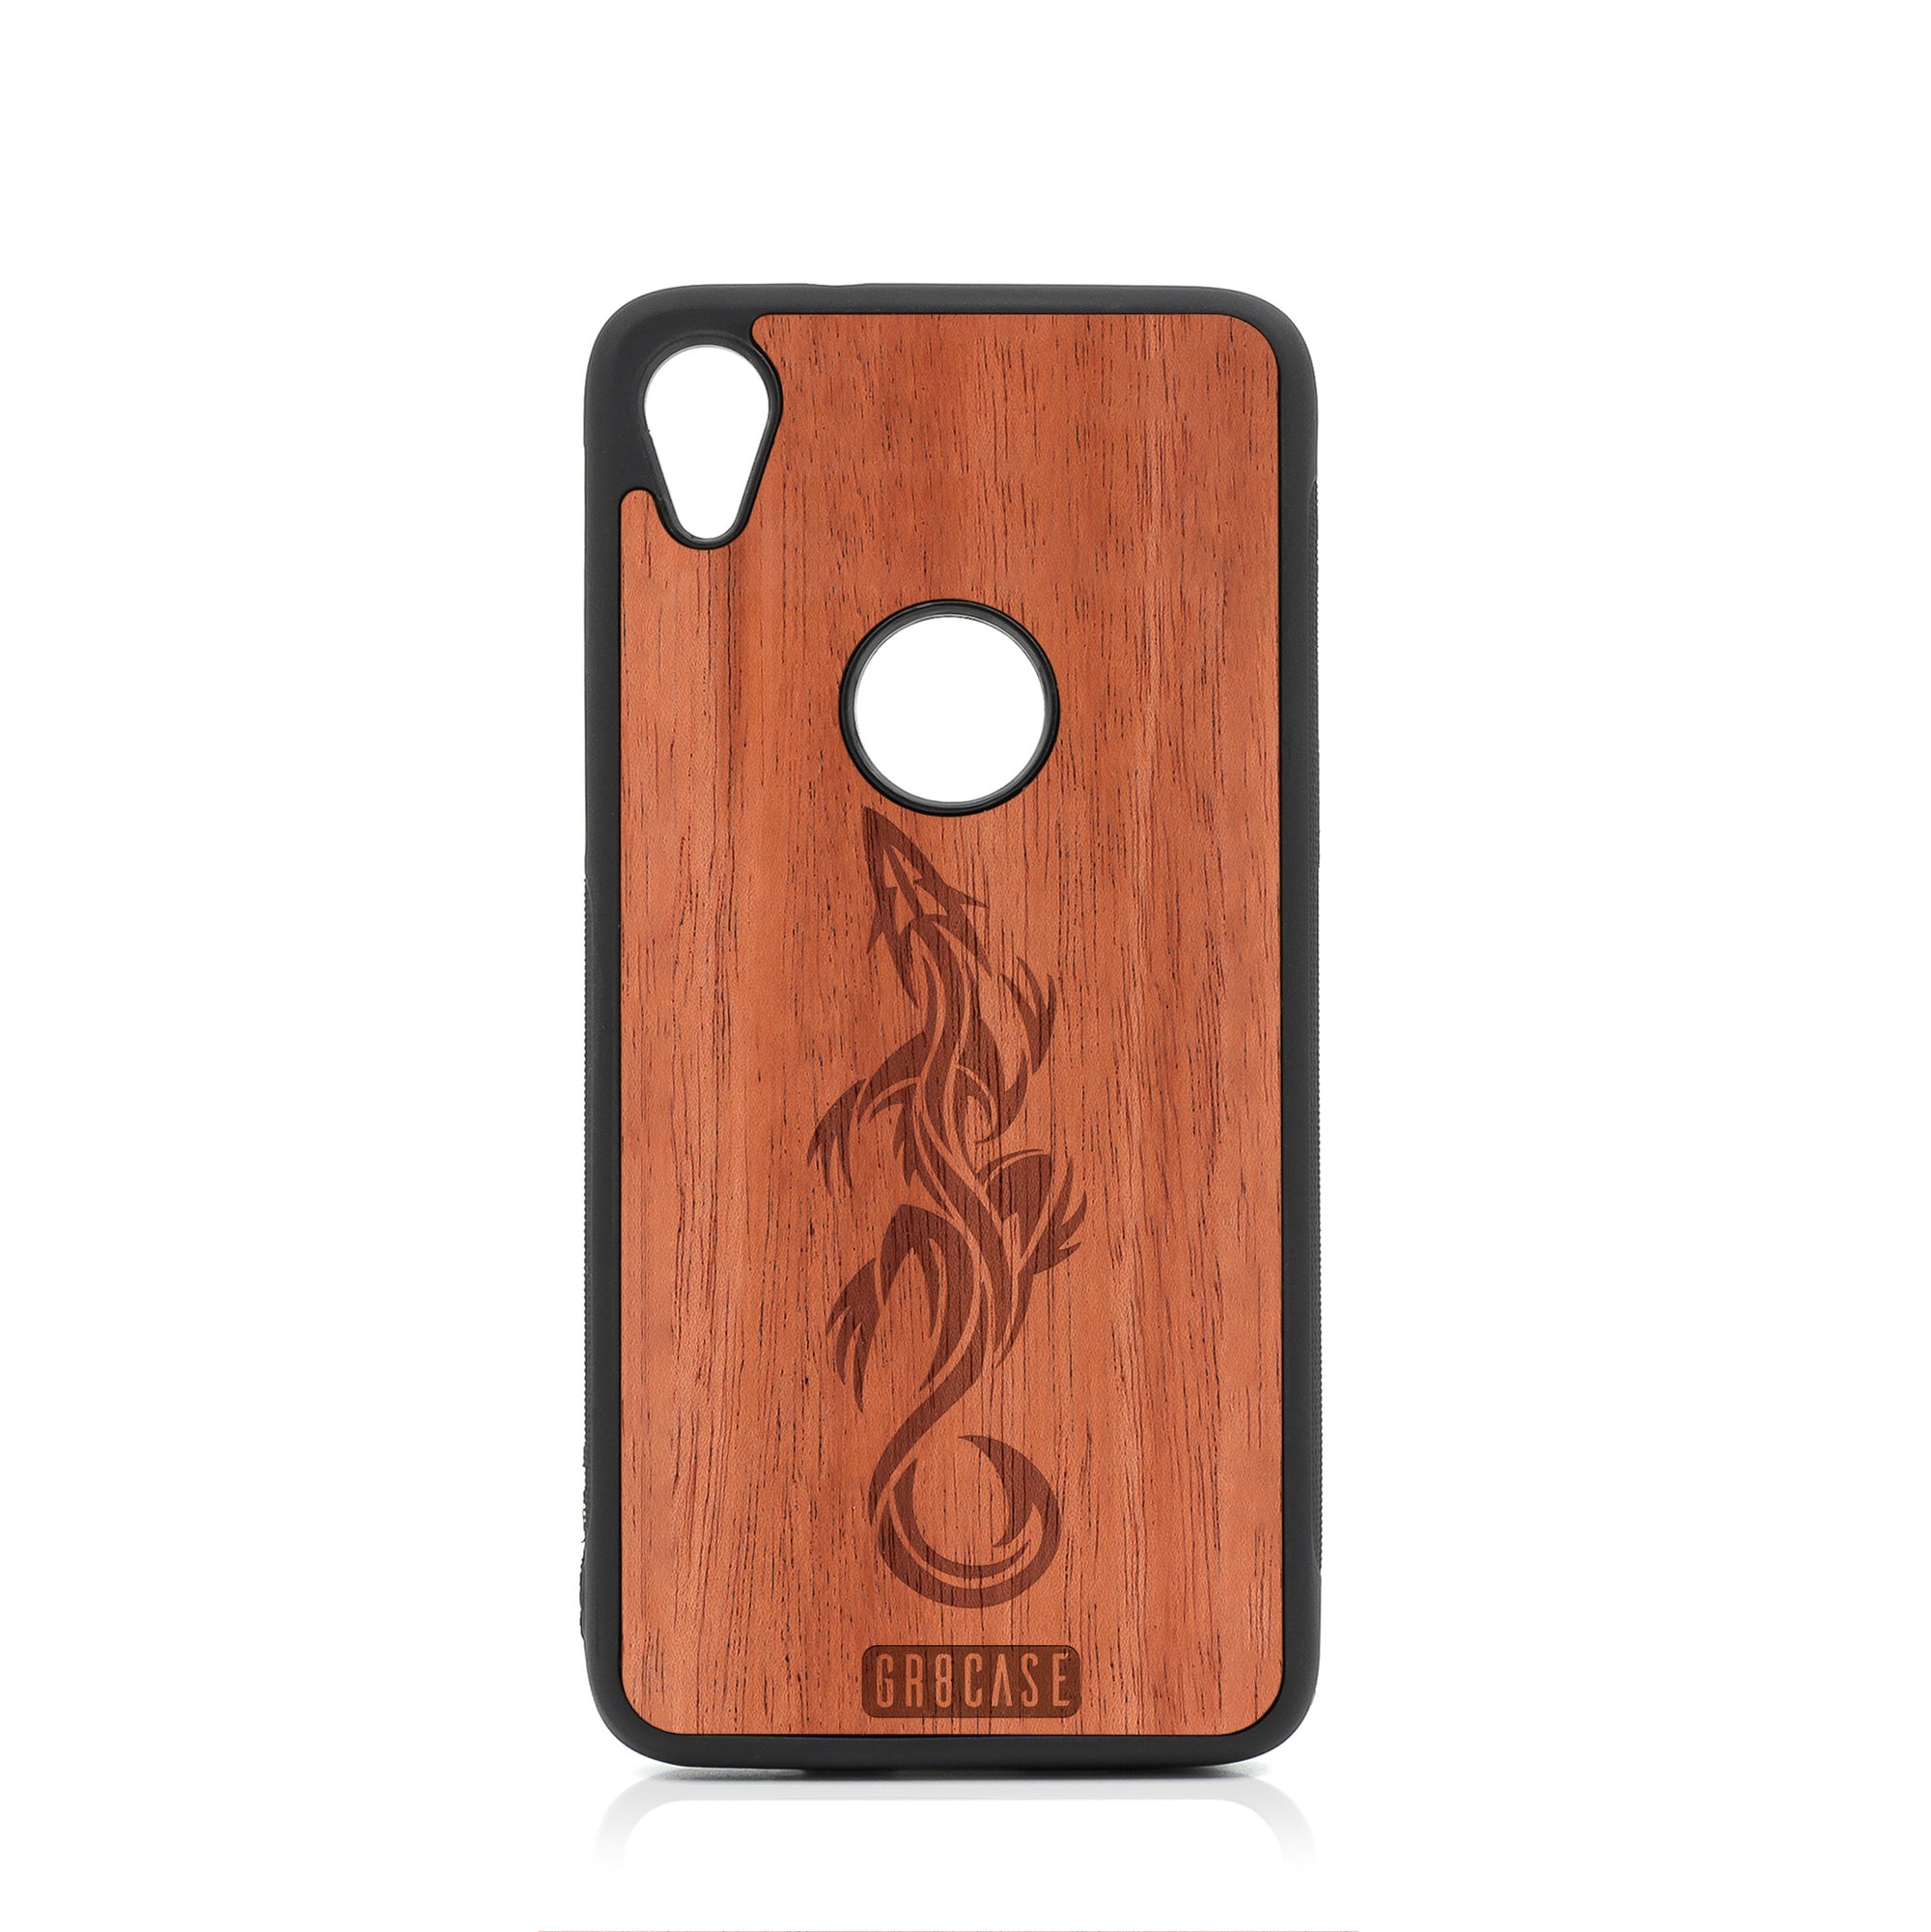 Lizard Design Wood Case For Moto E6 by GR8CASE